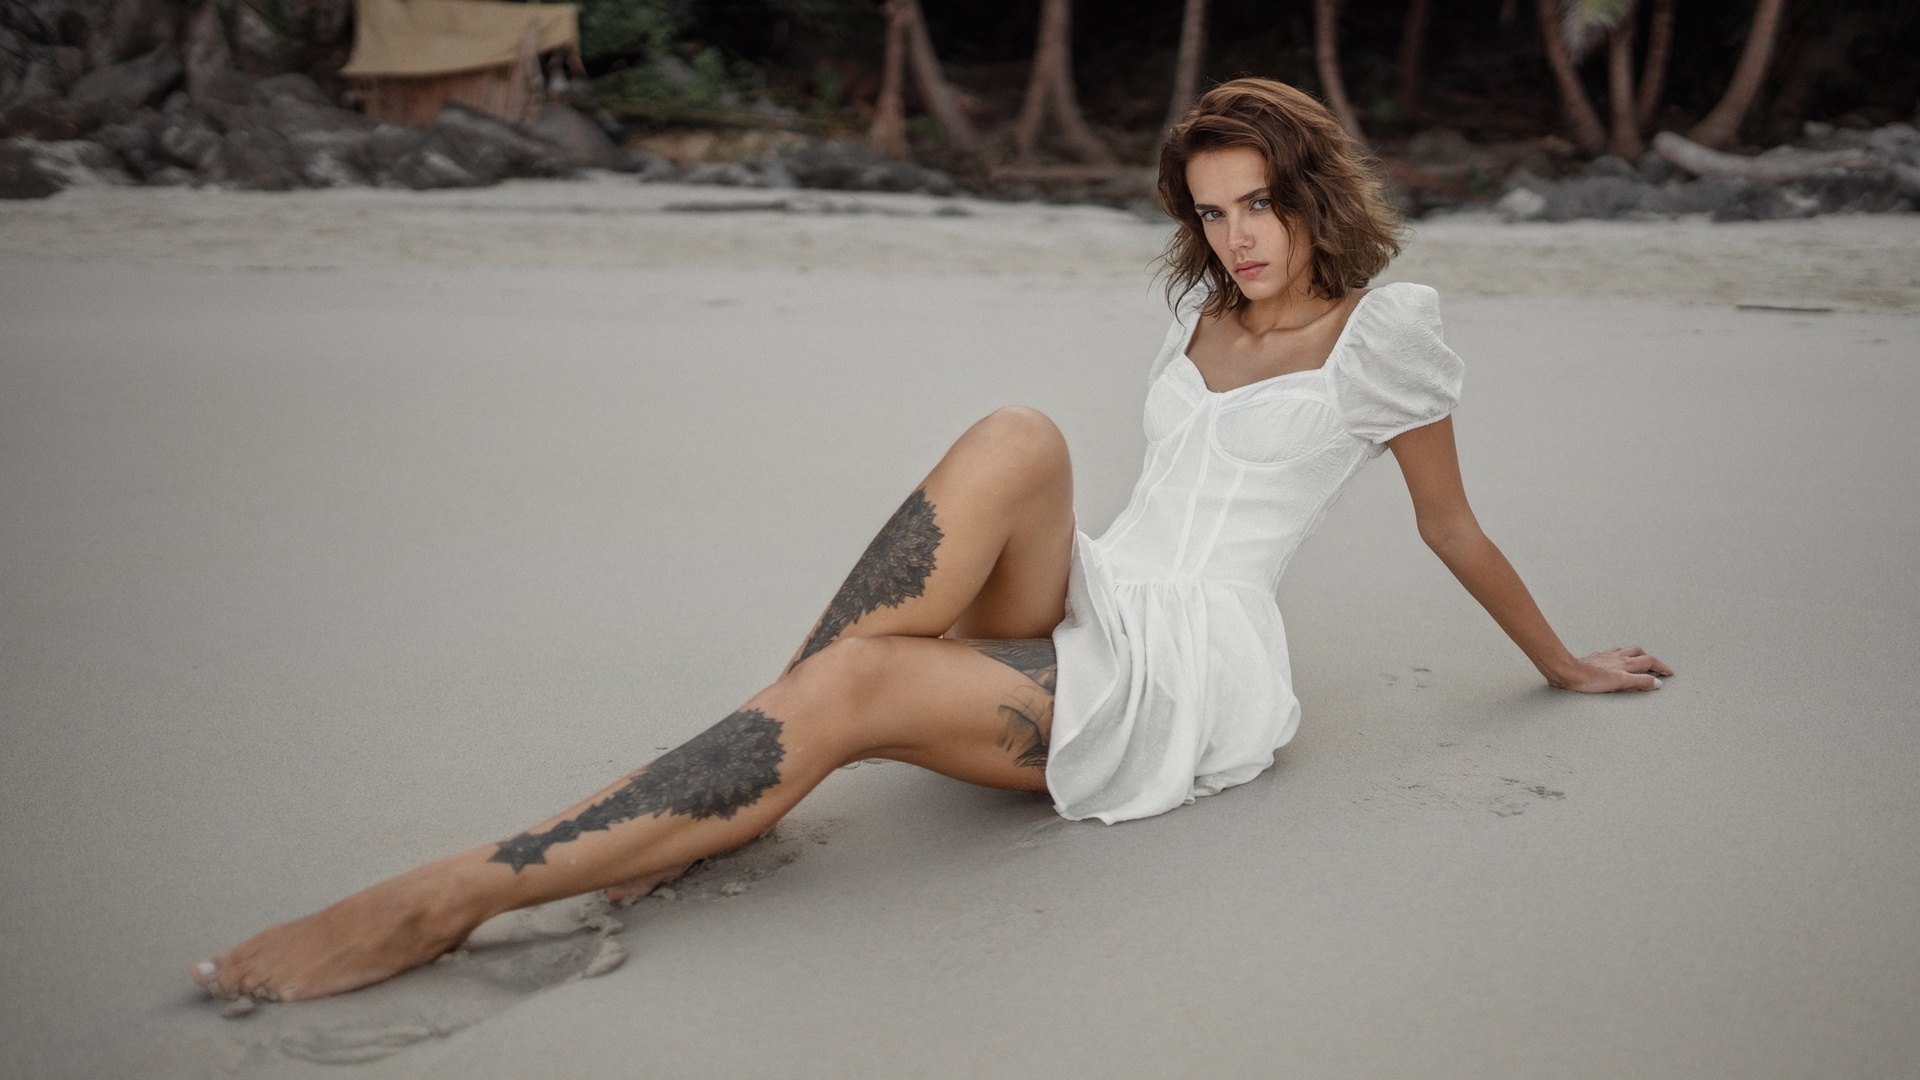 women outdoors, tattoo, women, model, brunette, white dress, dress, beach, sand, palm trees, legs